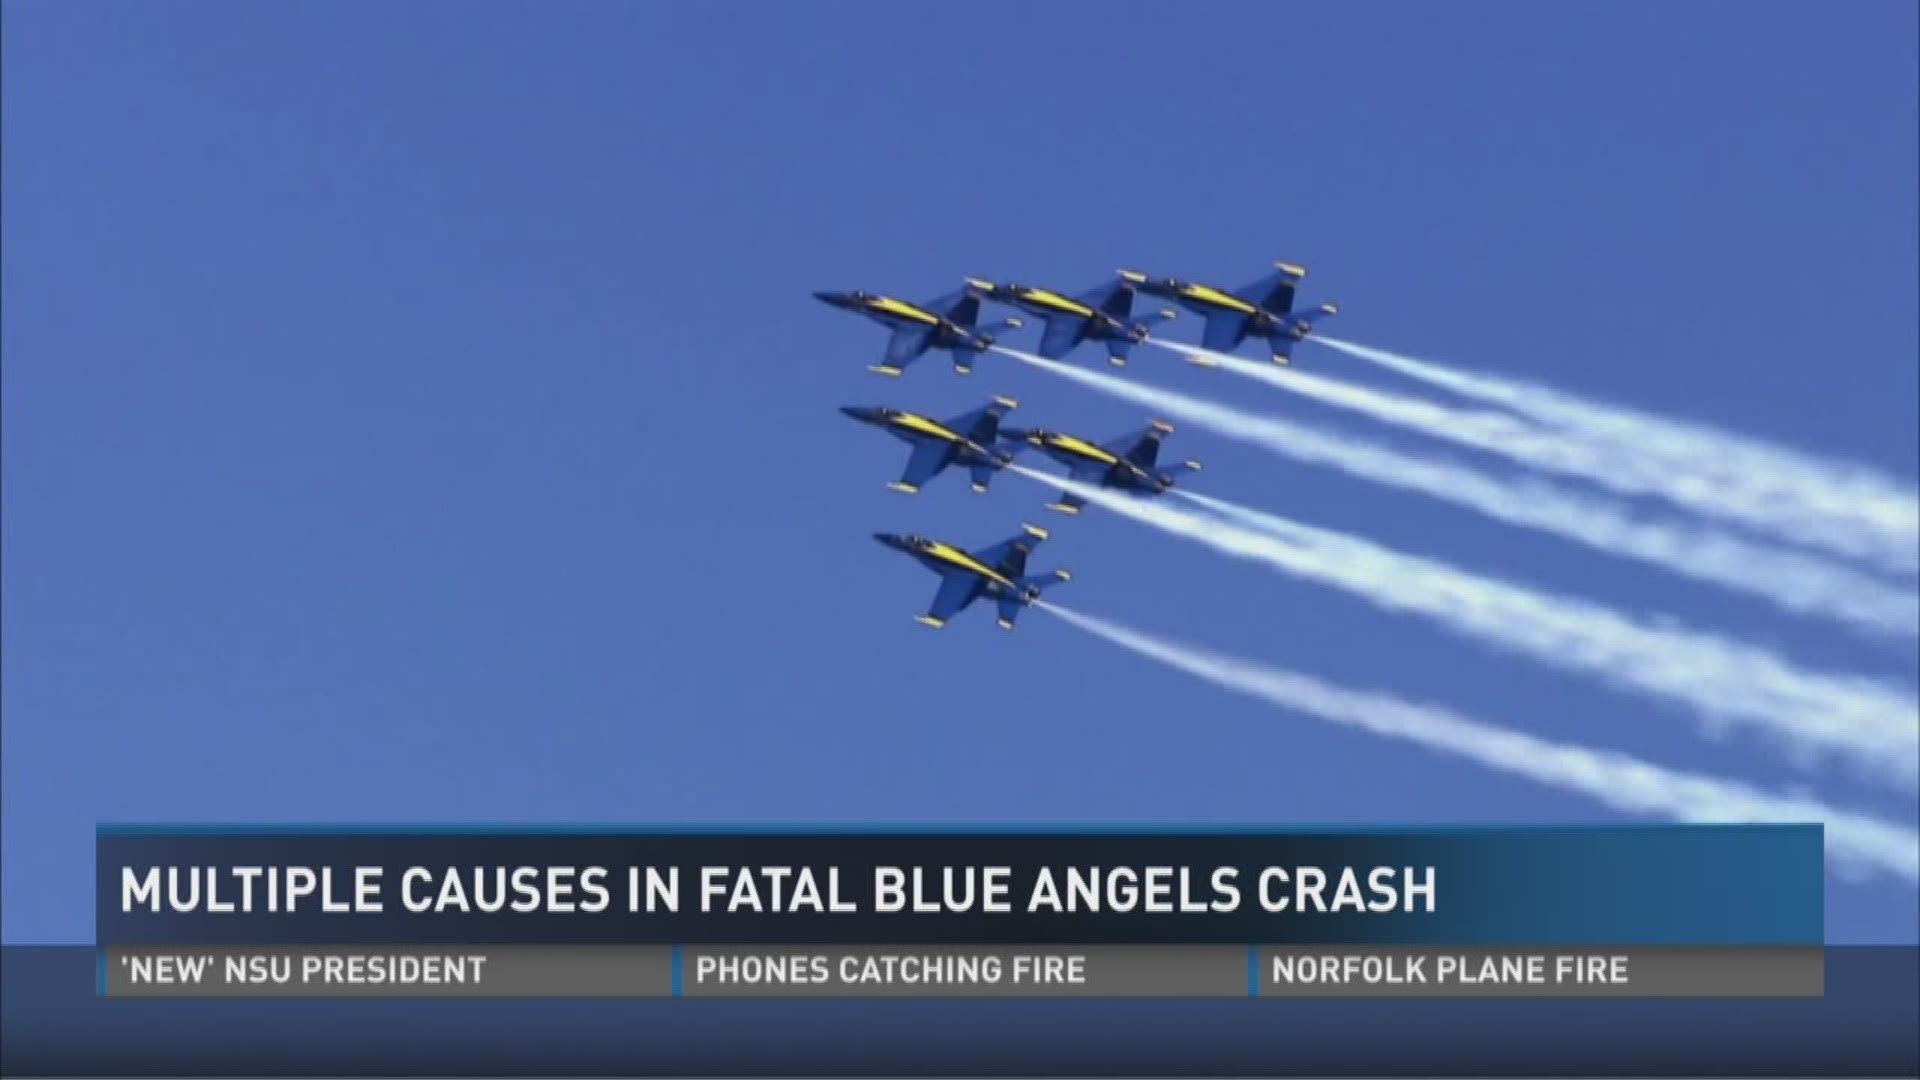 Navy Pilot Error Primary Cause Of Fatal Blue Angels Crash